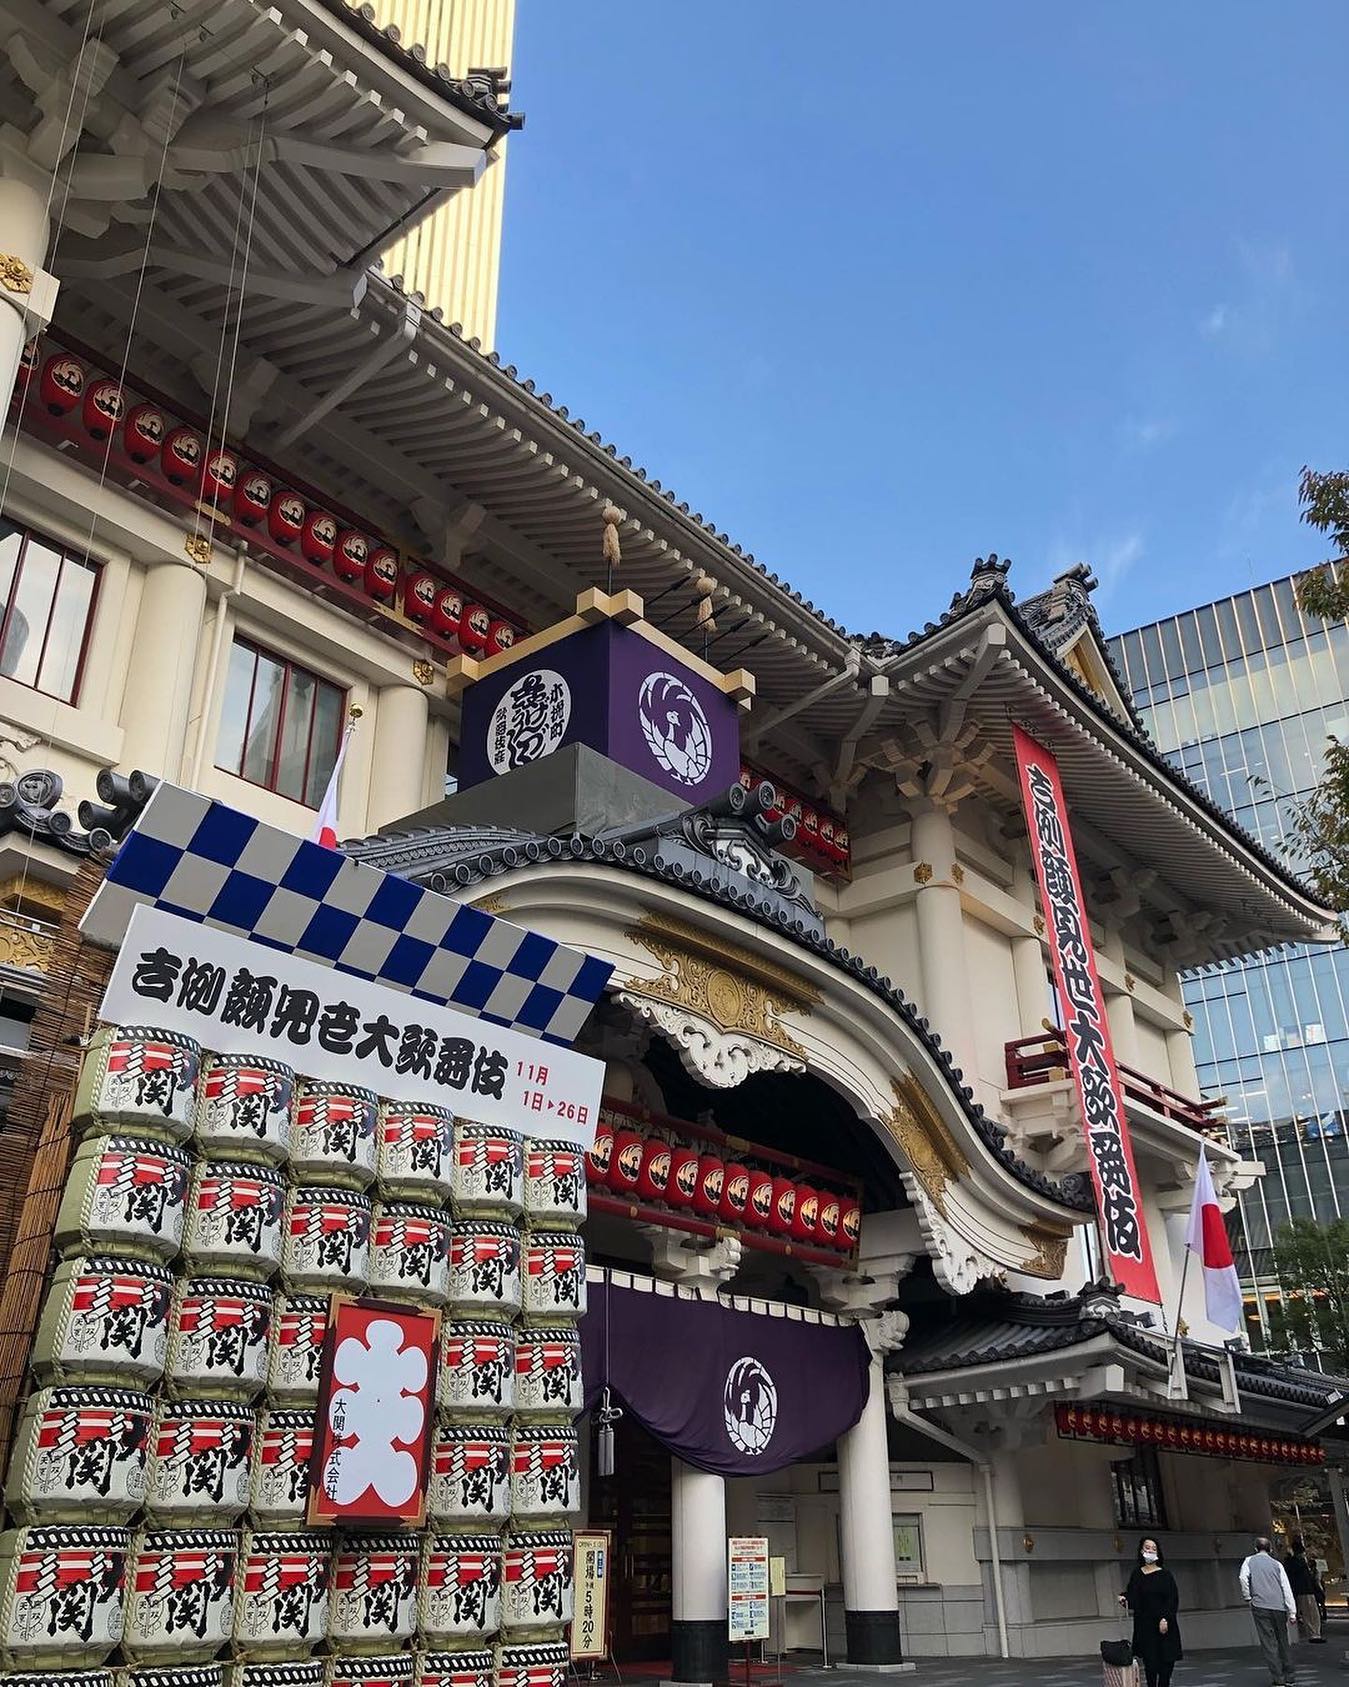 Enjoy Kabuki at Kabukiza Theatre